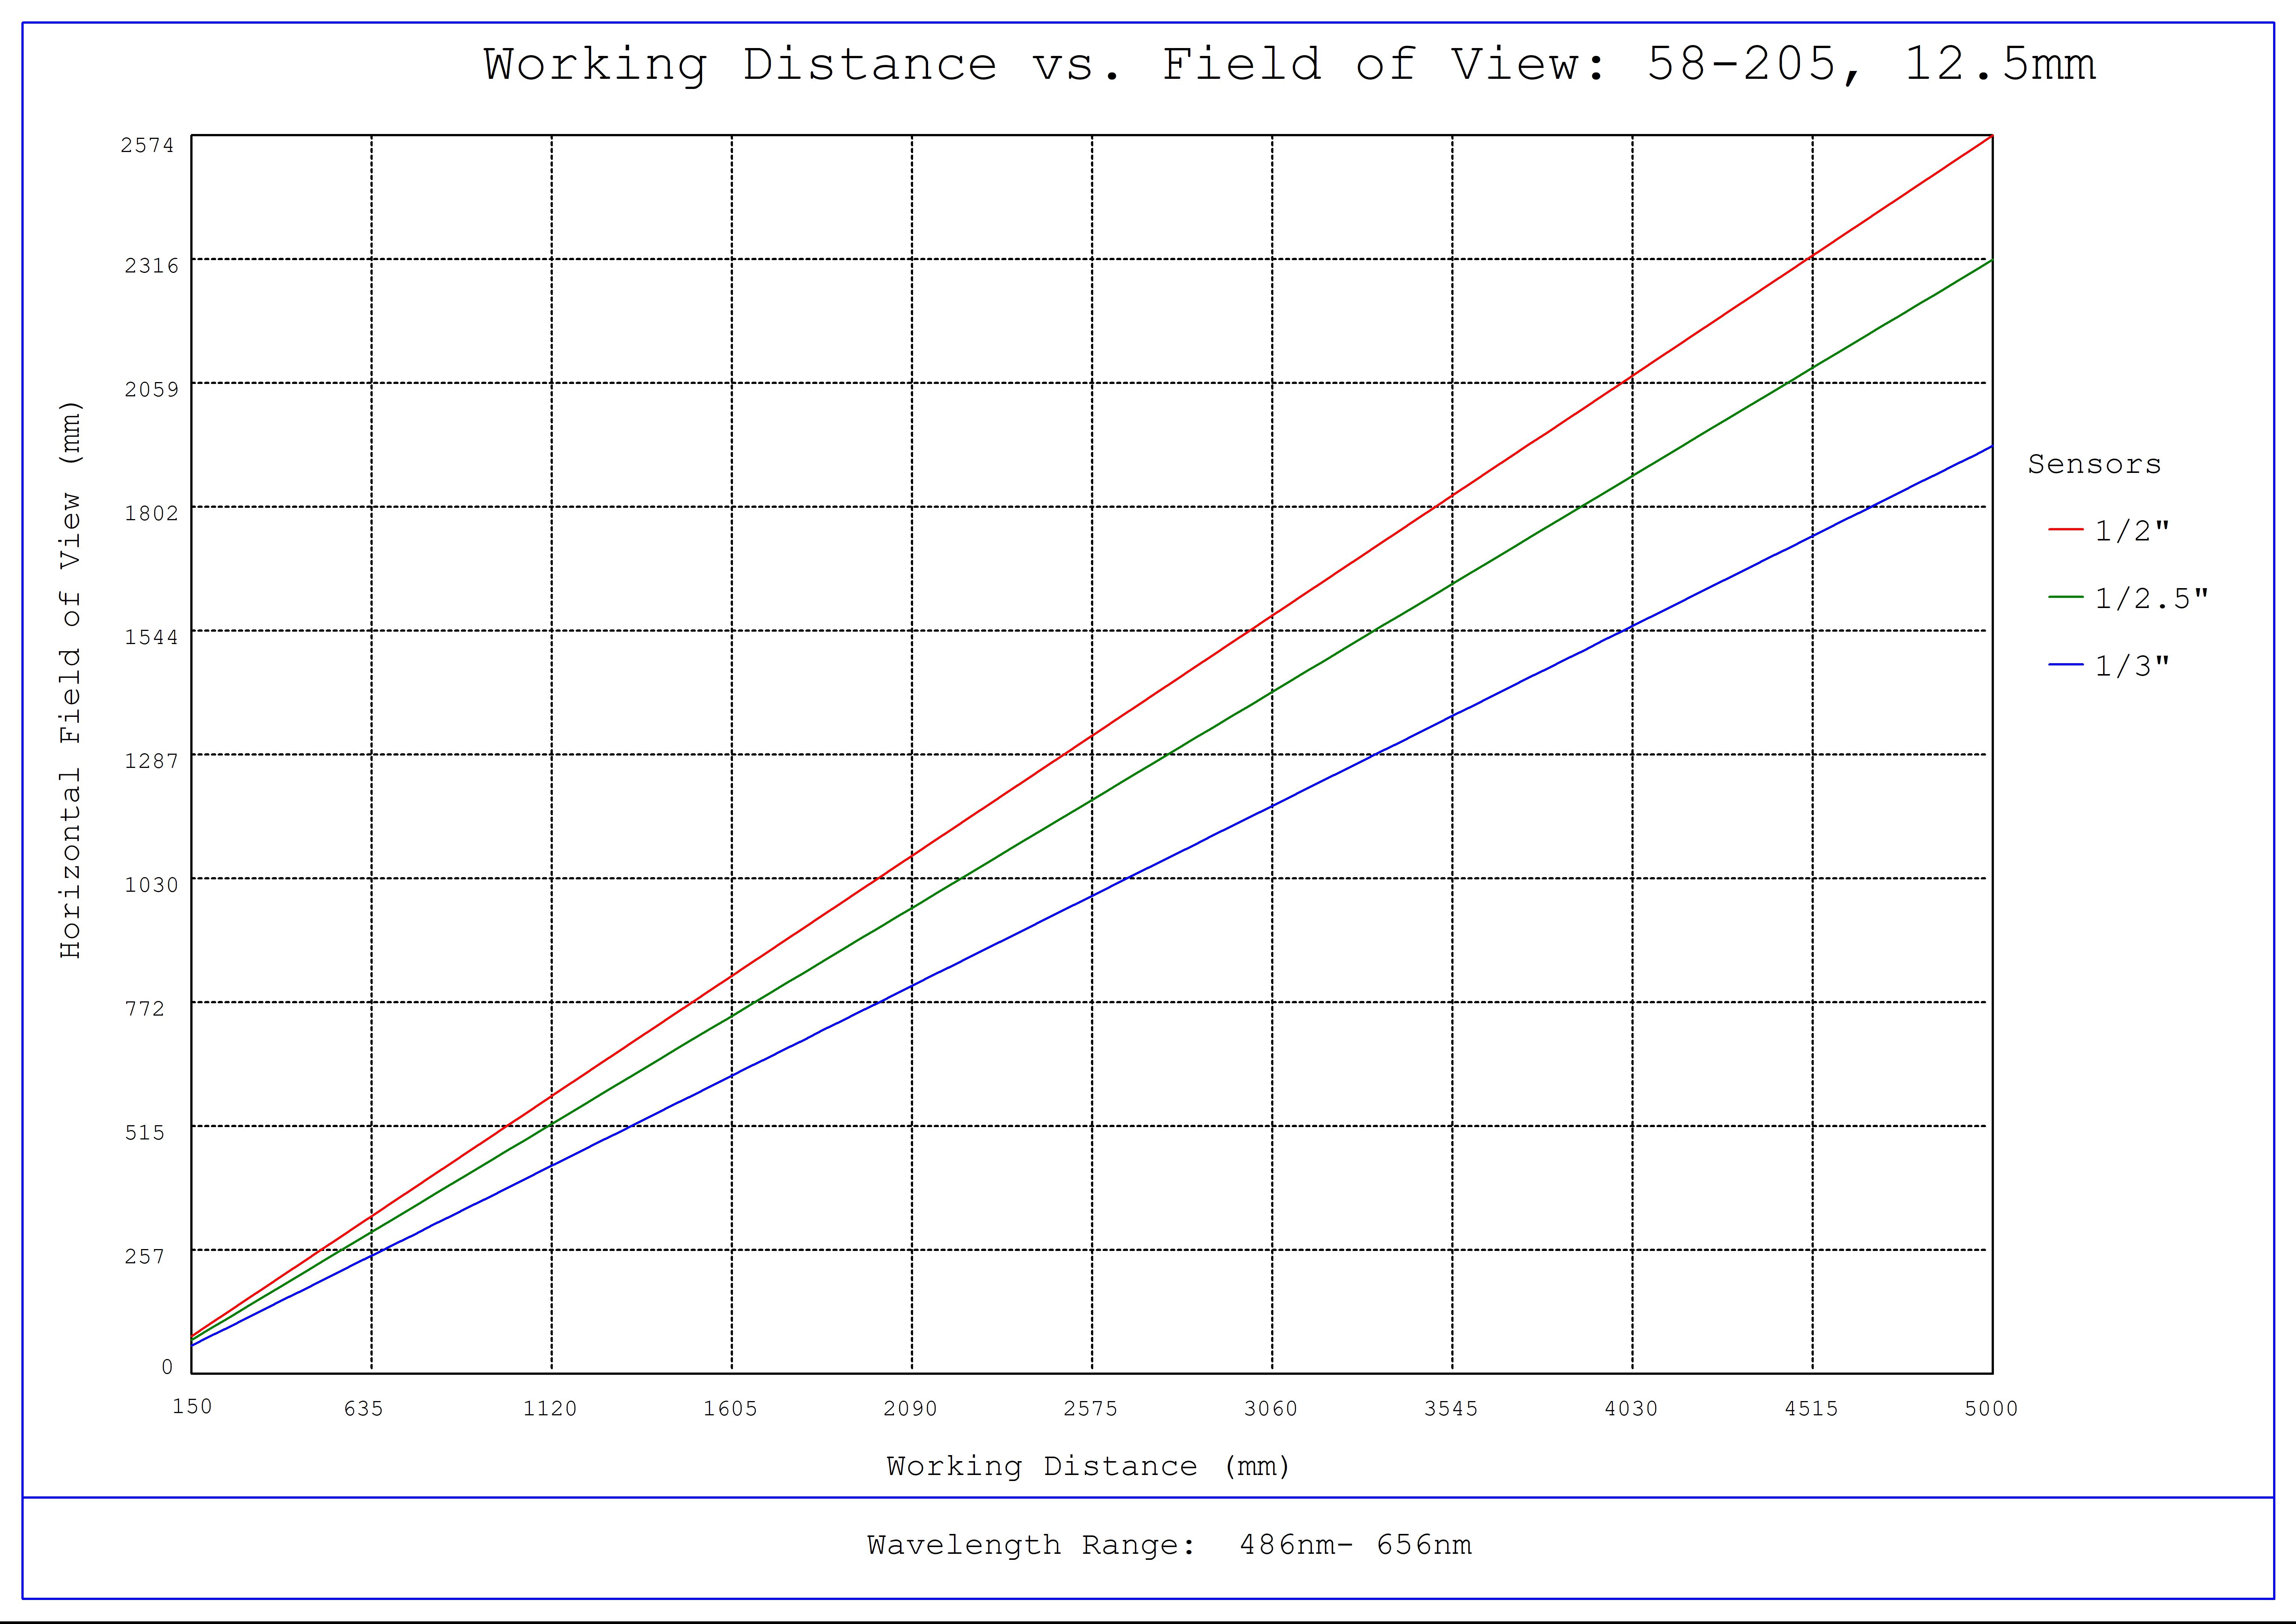 #58-205, 12.5mm FL f/2.5, Blue Series M12 Lens, Working Distance versus Field of View Plot